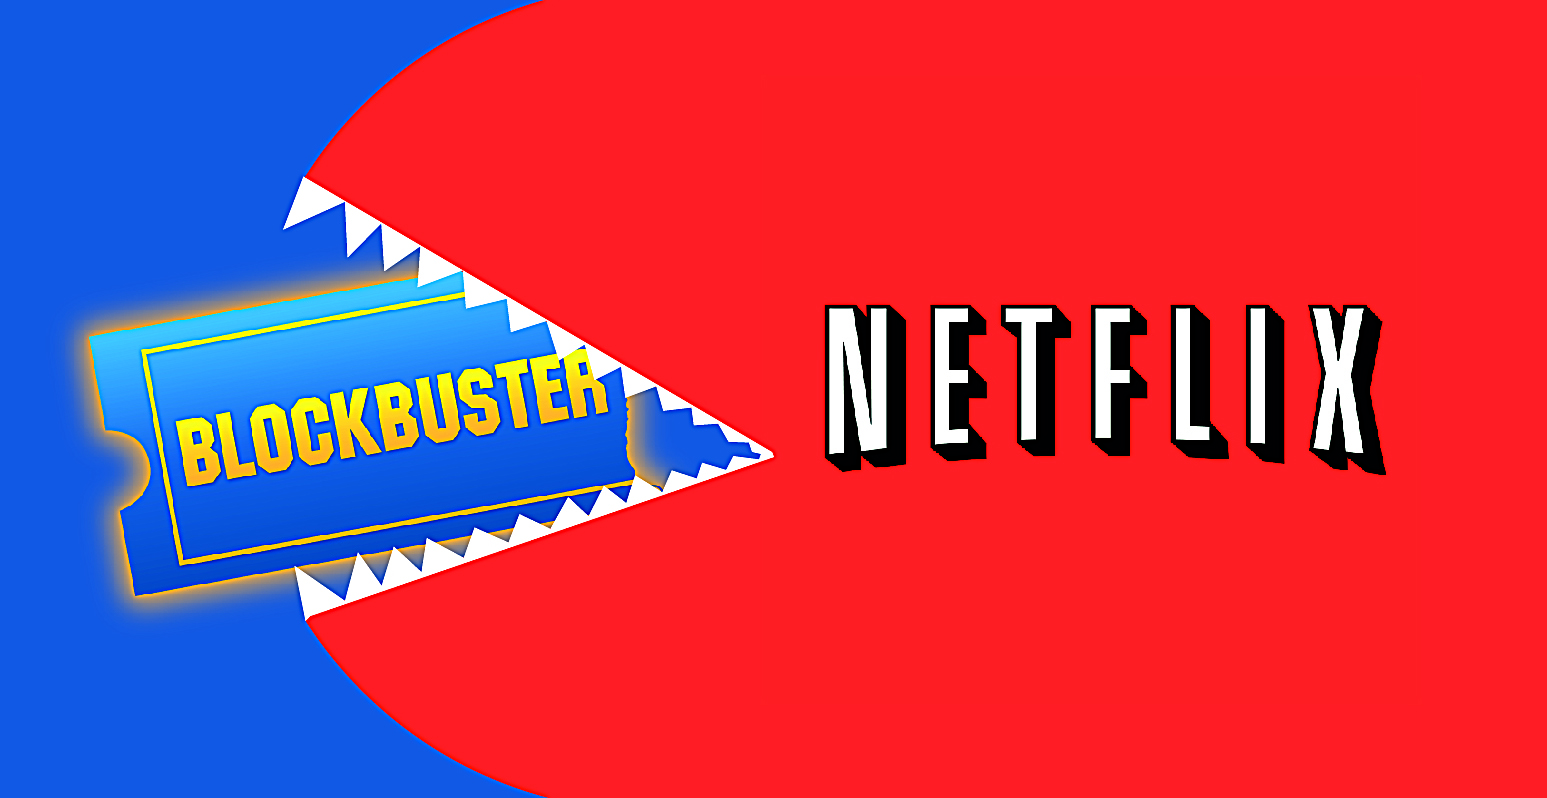 Netflix Blockbuster